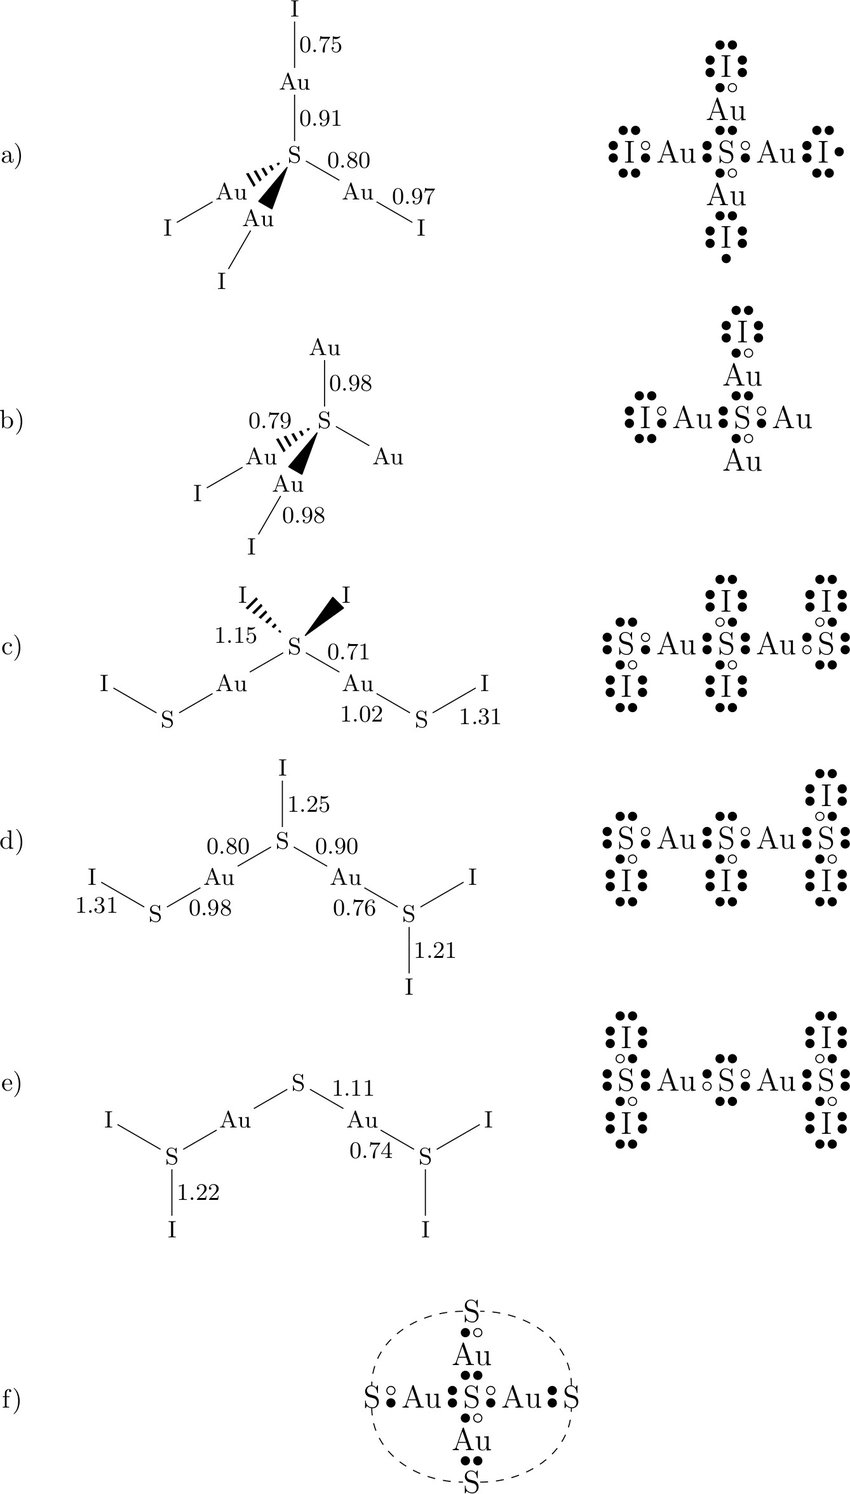 Lewis Dot Diagram Lewis Dot Diagram For Several Molecular Models A E And For Bulk Au